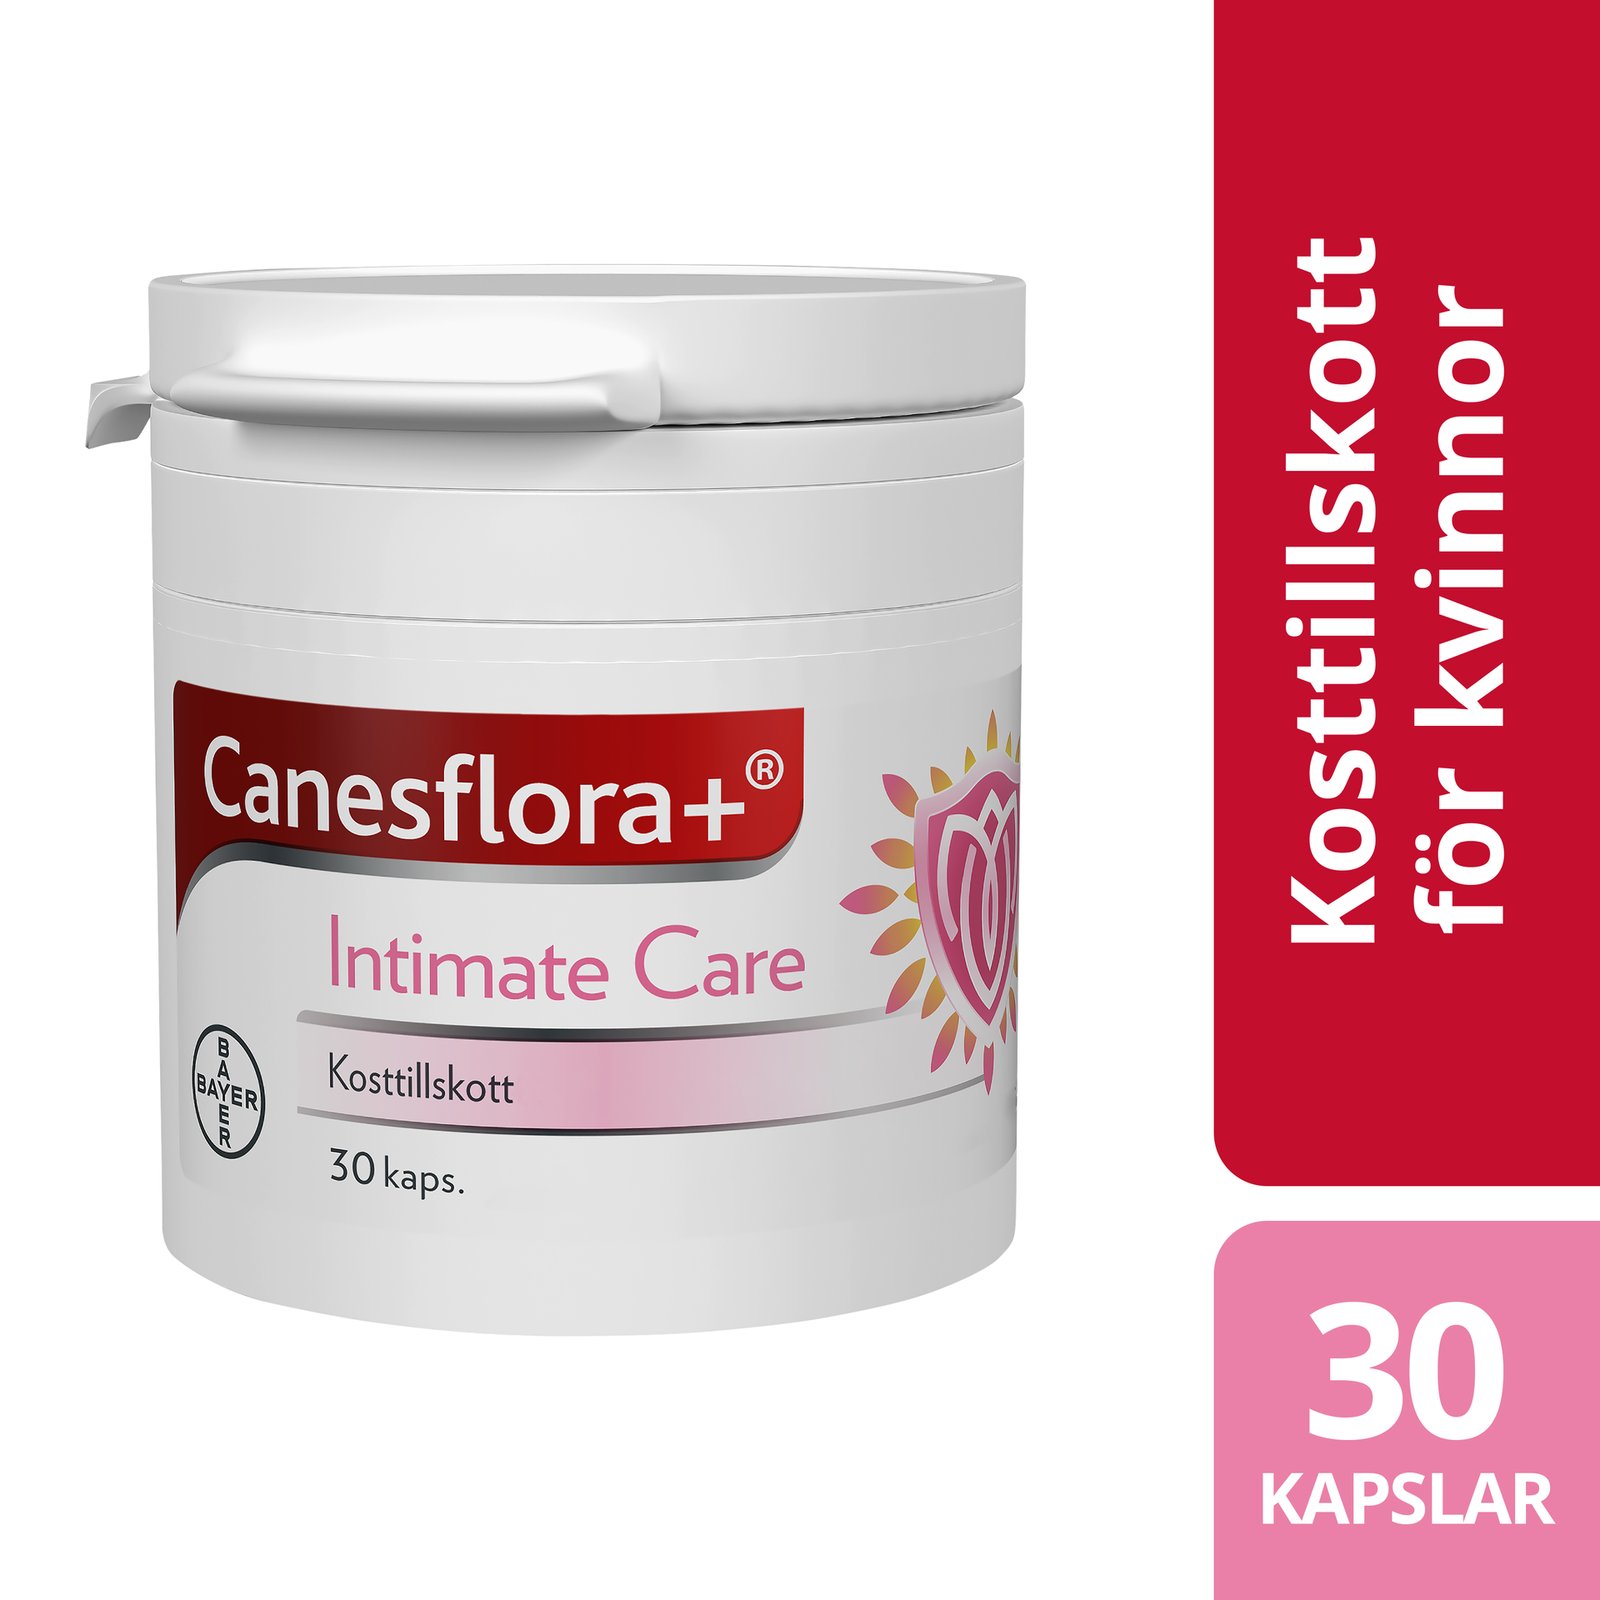 Canesflora+ Intimate Care 30 kapslar